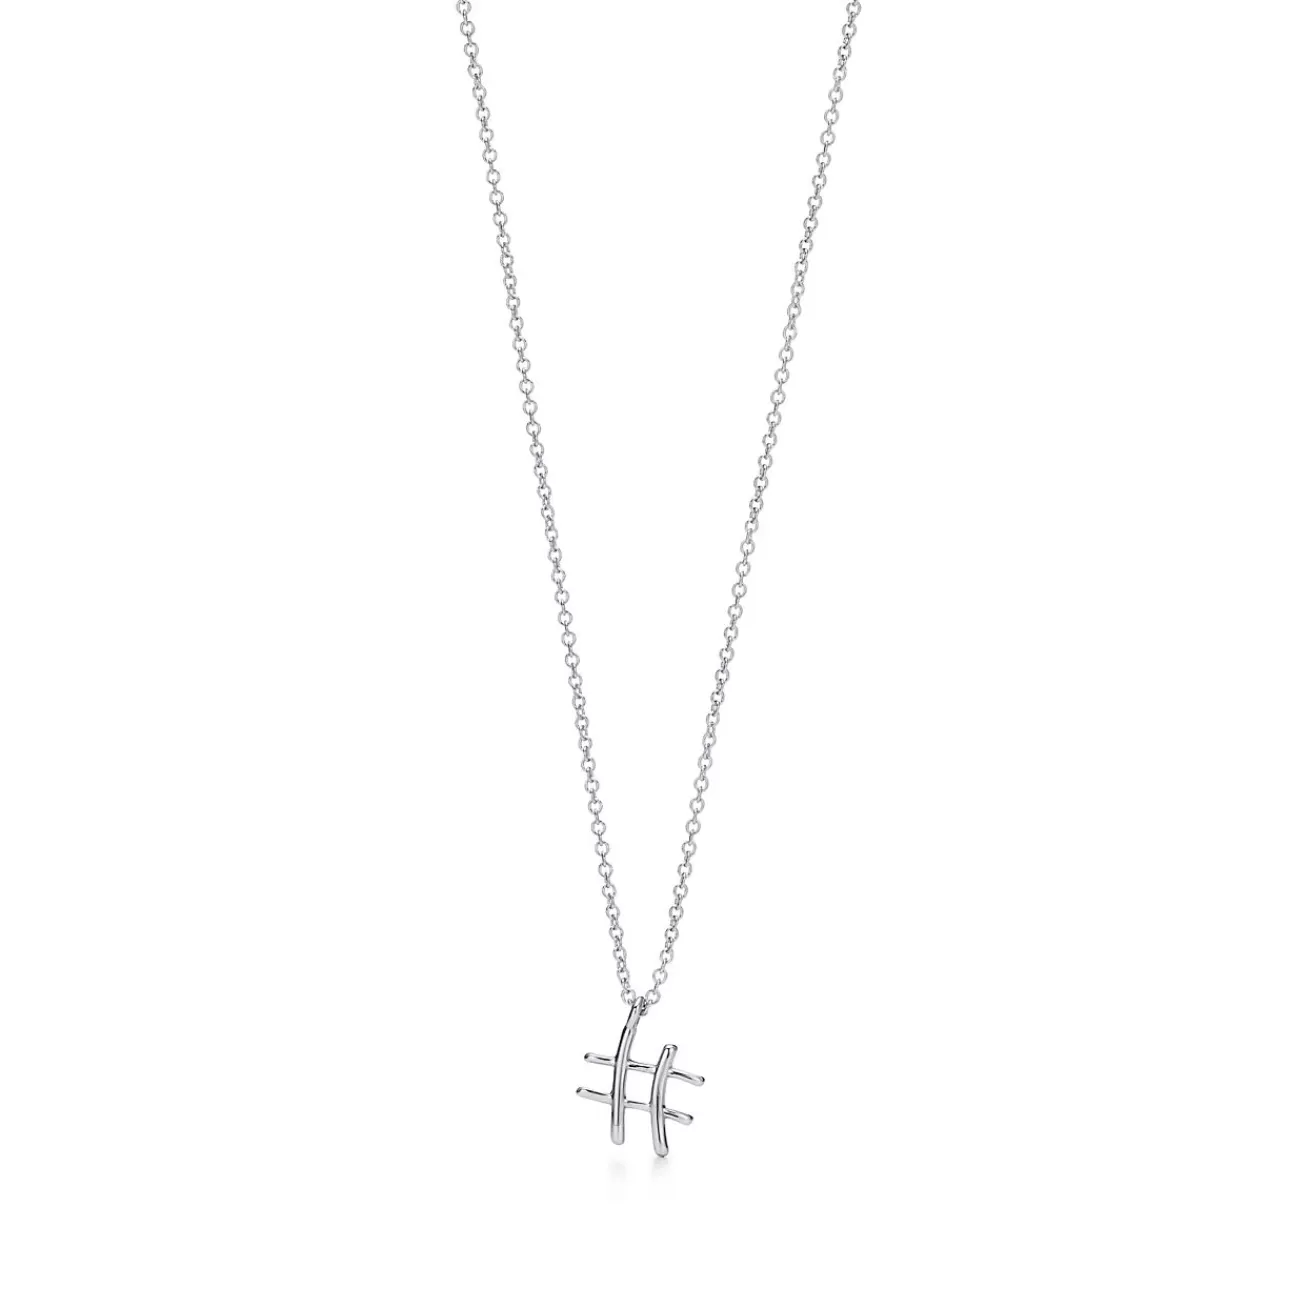 Tiffany & Co. Paloma's Graffiti hashtag pendant in sterling silver, small. | ^ Necklaces & Pendants | Sterling Silver Jewelry